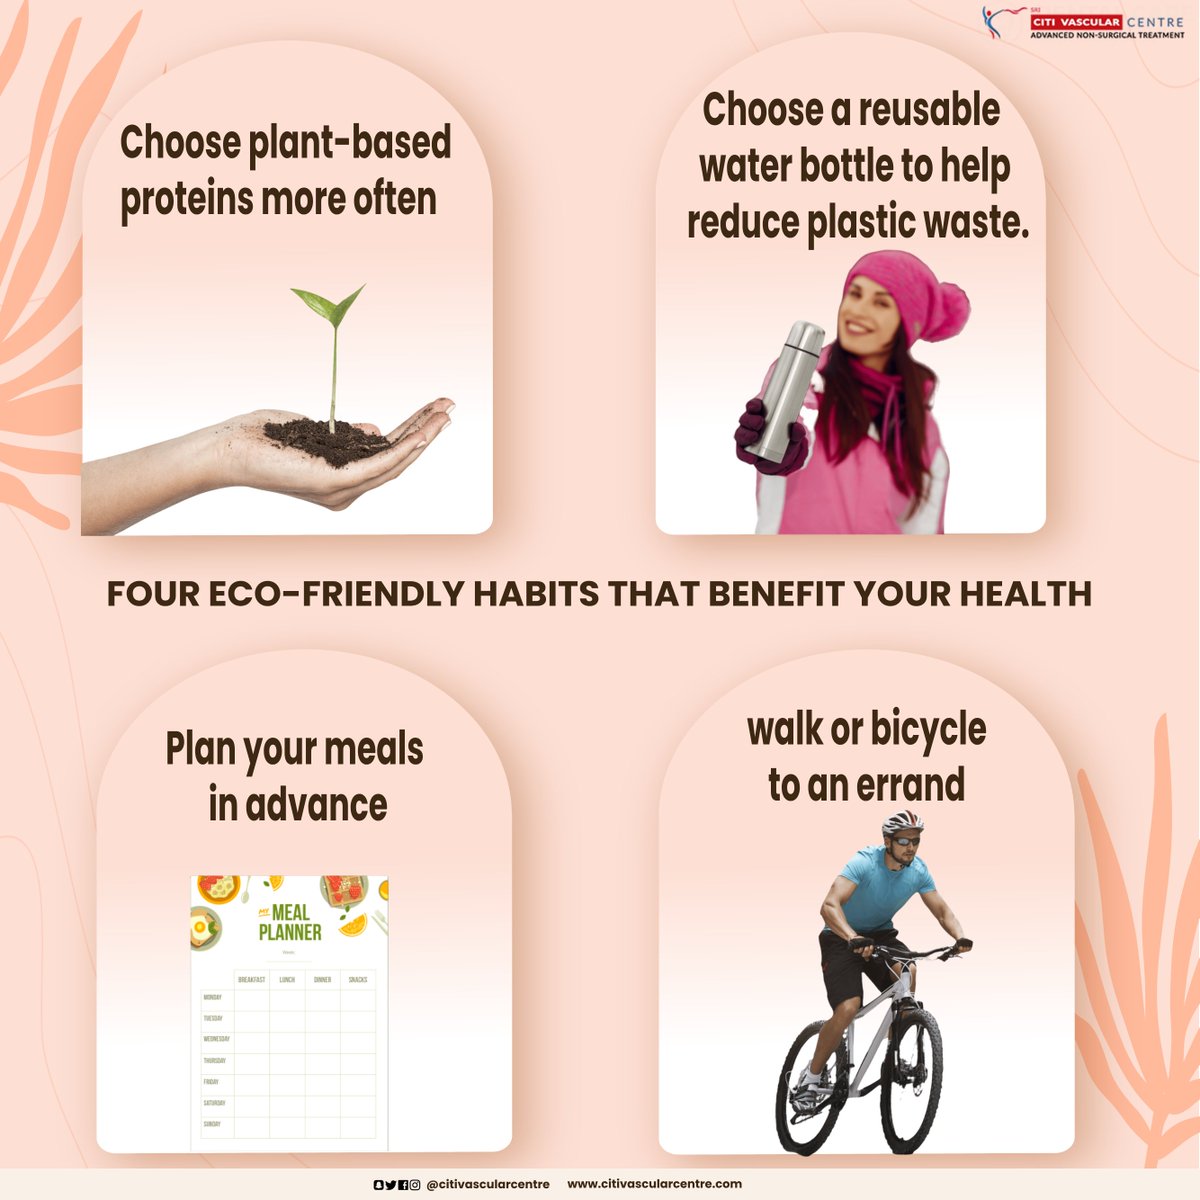 FOUR ECO-FRIENDLY HABITS THAT BENEFIT YOUR HEALTH  

#ecofriendlyhabits #greenliving #sustainableliving #healthyhabits
#plantbaseddiet #reusablewaterbottle #mealplanning #walking
#biking #savetheplanet